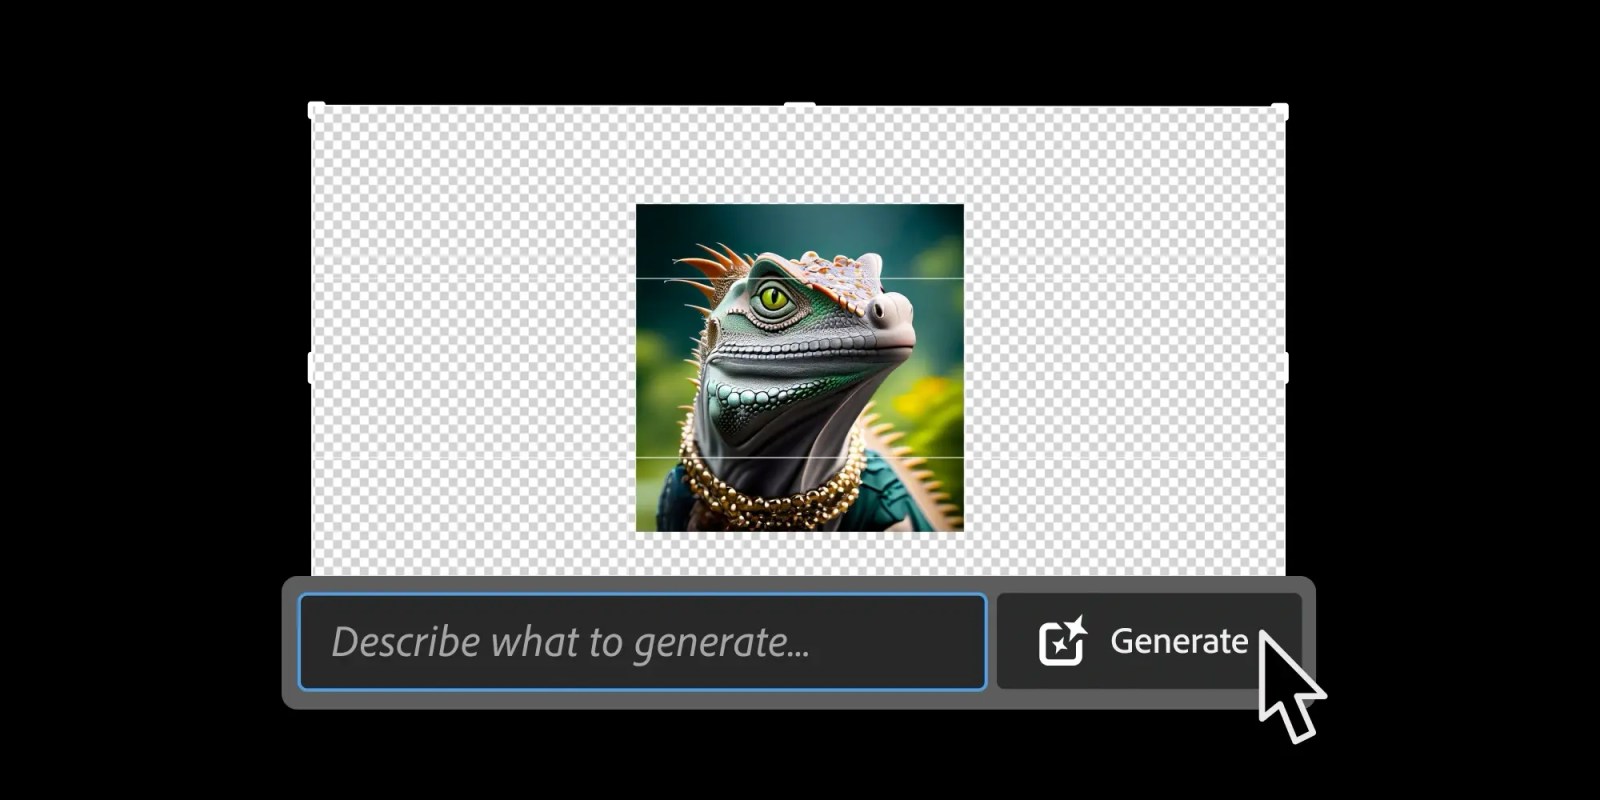 Adobe Photoshop Generative Expand A